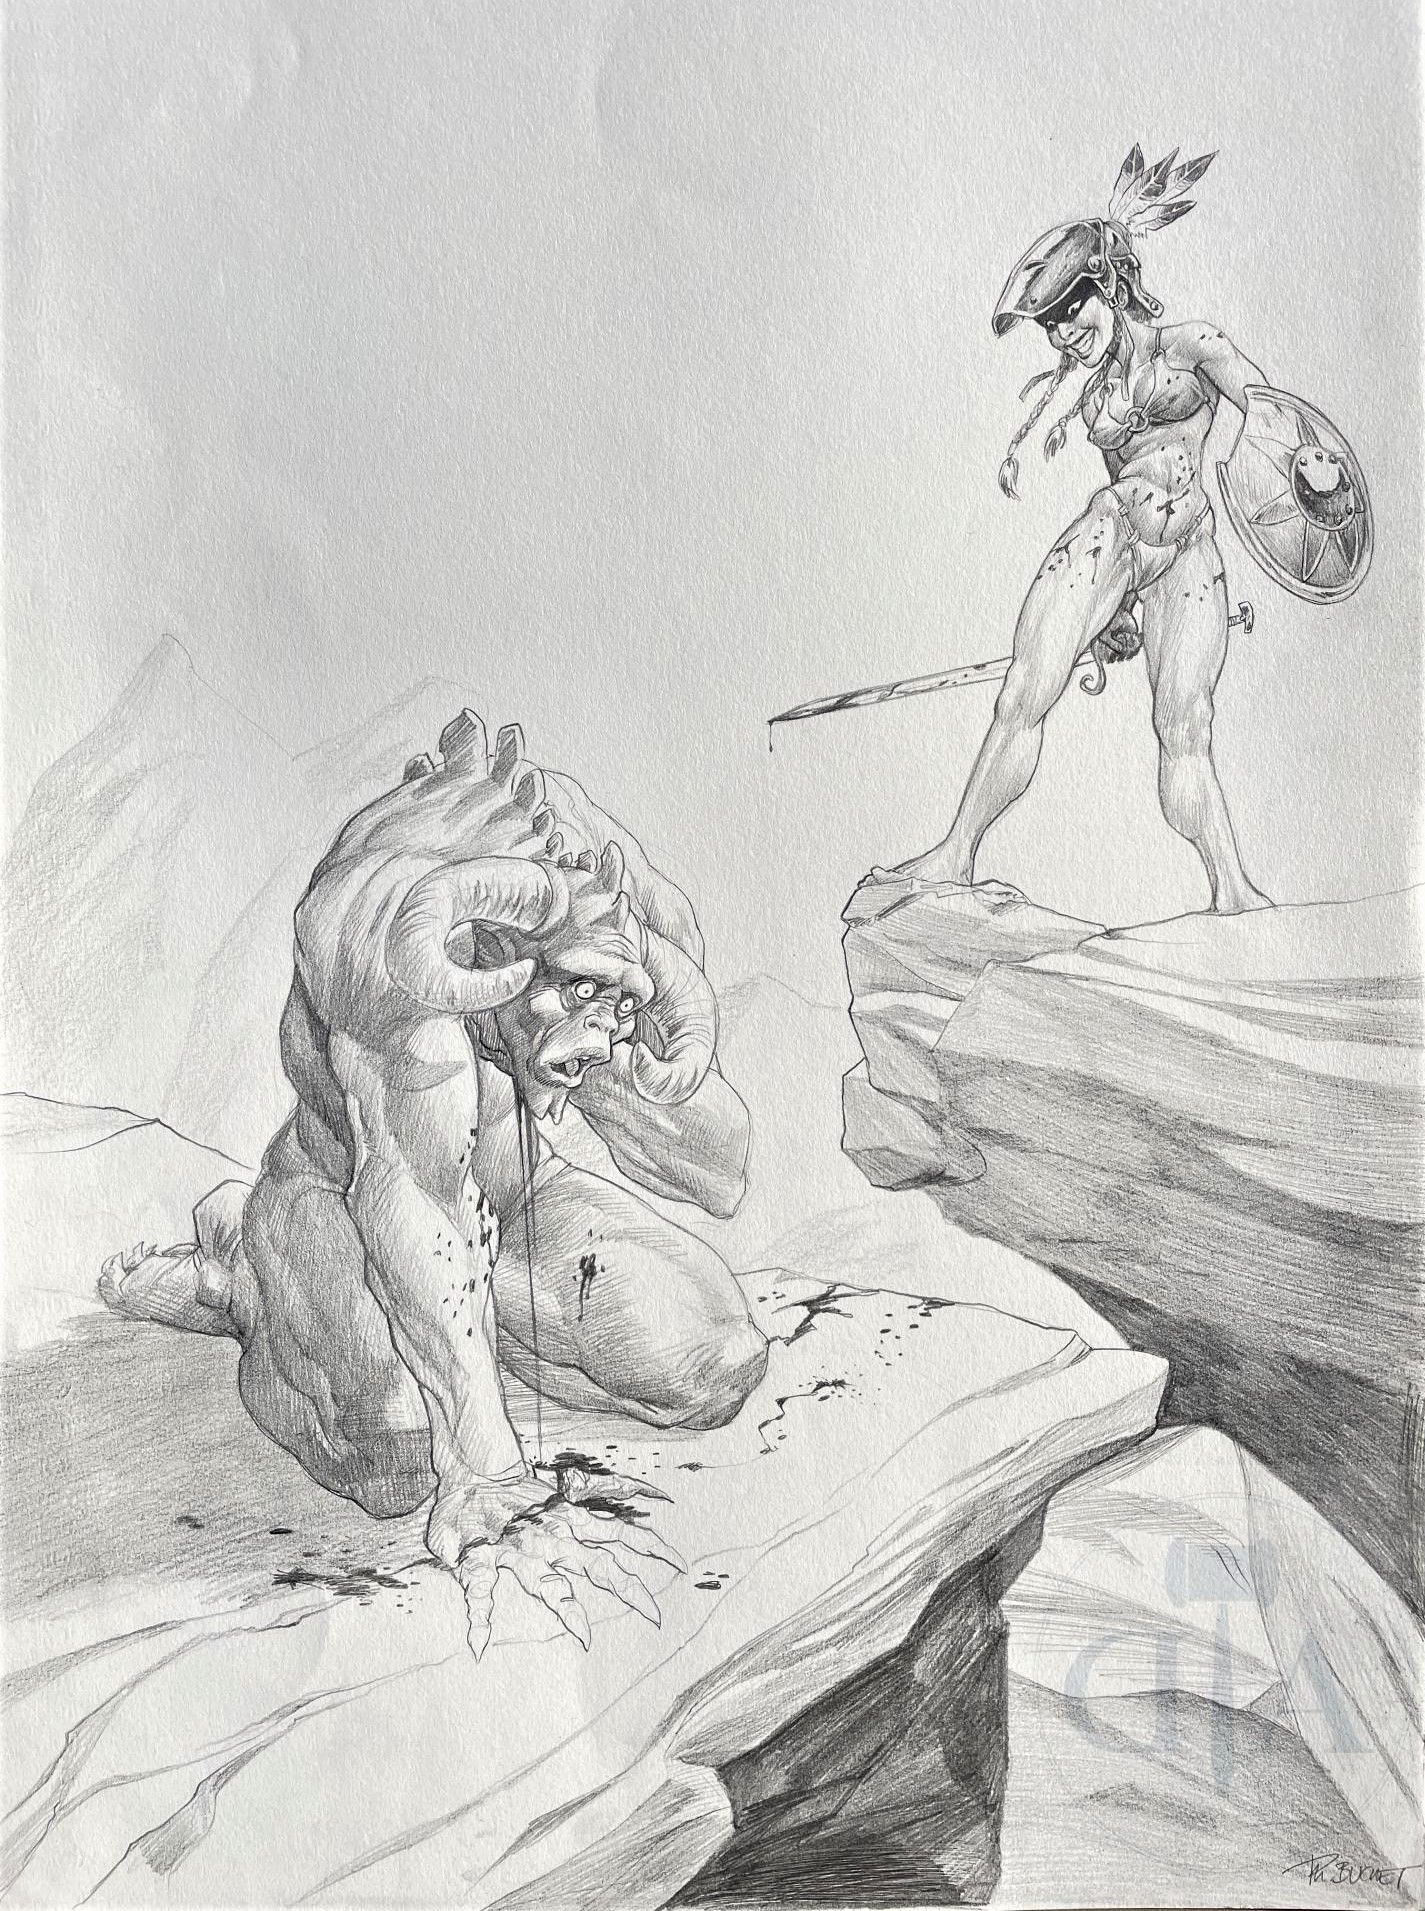 Null 
Buchet Philippe/原画，描绘了一个年轻的女战士（Nävis？），她杀死了一个令人印象深刻的对手，为 "Crayonnés 2 "作品集&hellip;